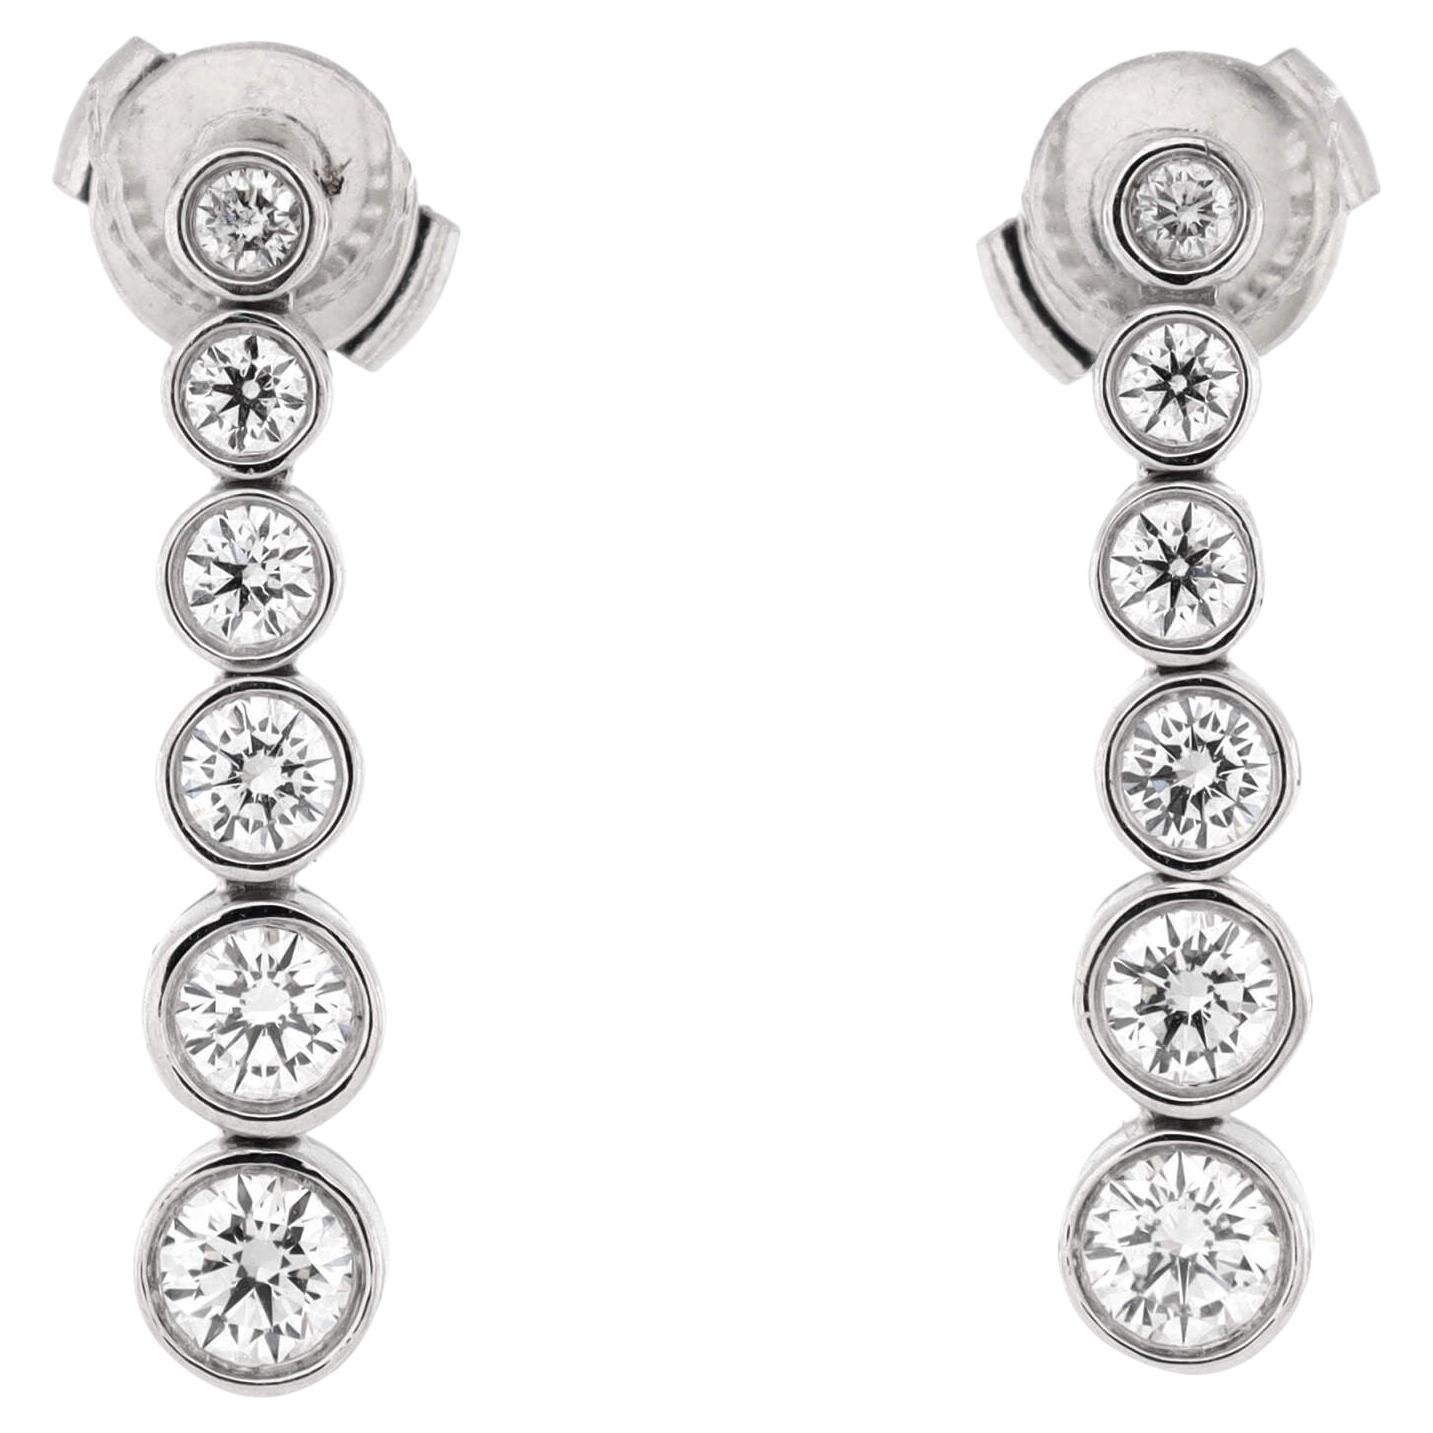 Tiffany & Co. Graduated Jazz Drop Earrings Platinum and Diamonds